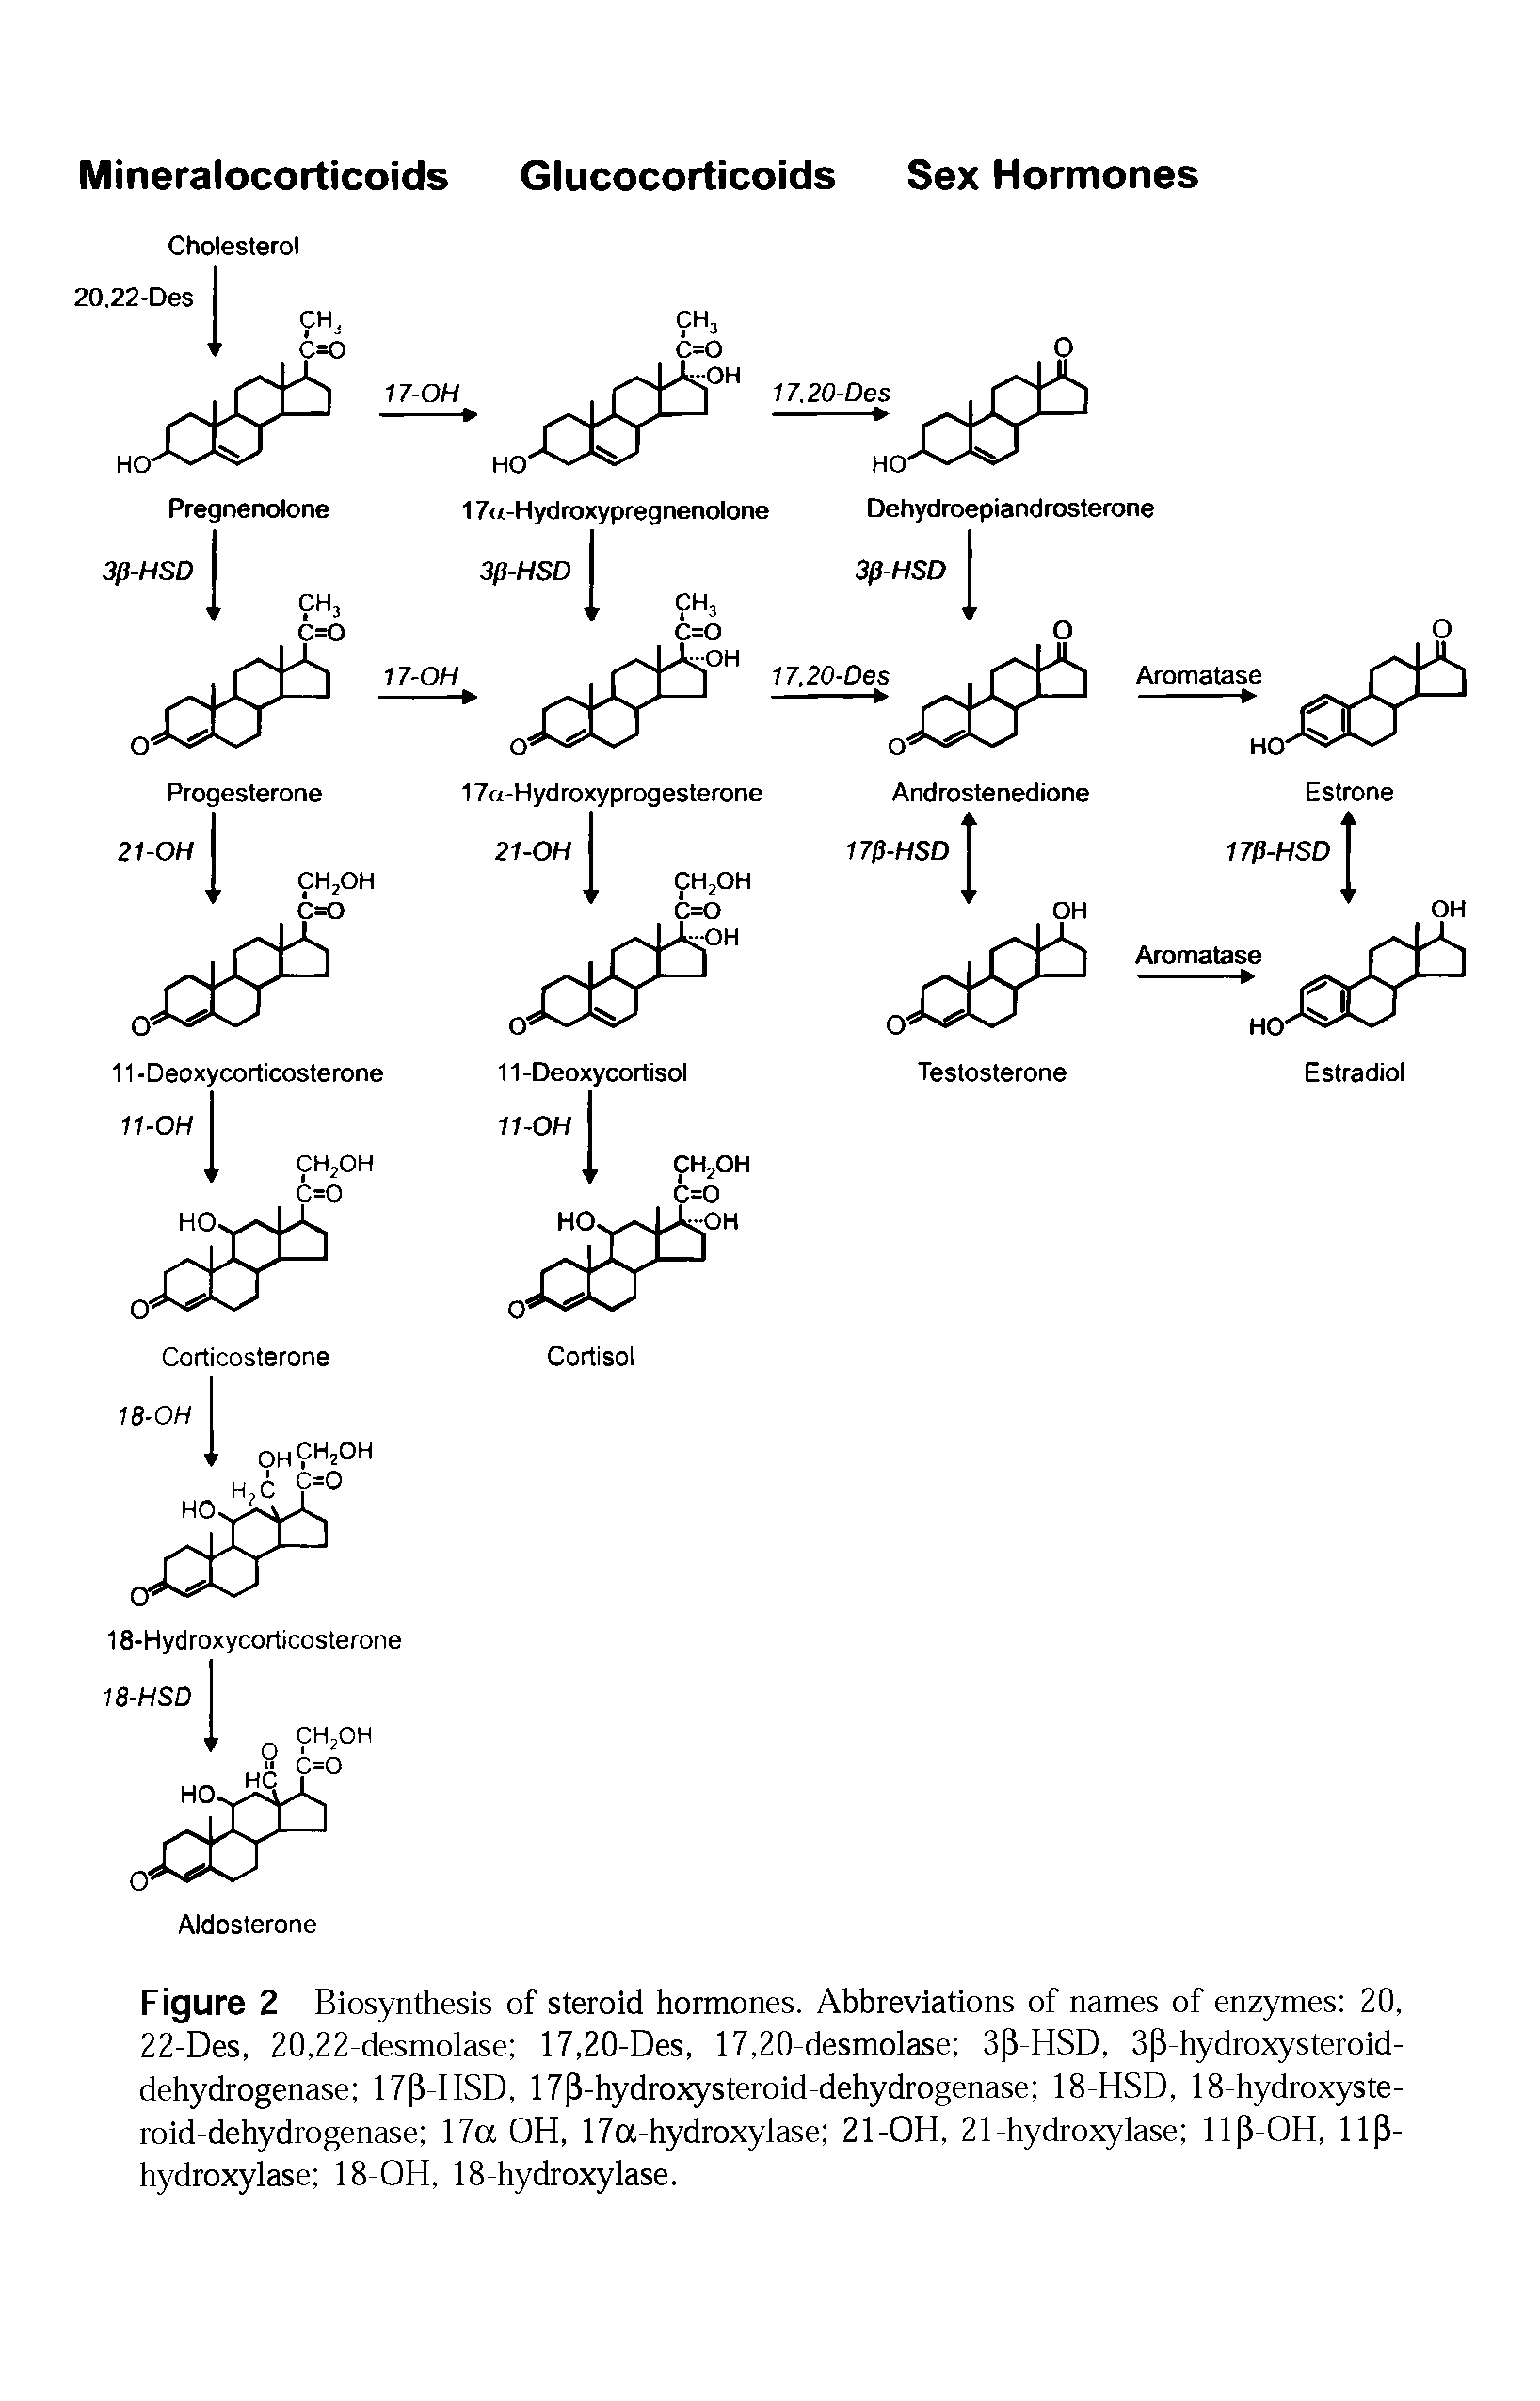 Figure 2 Biosynthesis of steroid hormones. Abbreviations of names of enzymes 20, 22-Des, 20,22-desmolase 17,20-Des, 17,20-desmolase 3 3-HSD, 3 3-hydroxysteroid-dehydrogenase 17 3-HSD, 17 3-hydroxysteroid-dehydrogenase 18-HSD, 18-hydroxyste-roid-dehydrogenase 17a-OH, 17a-hydroxylase 21-OH, 21-hydroxylase ll 3-OH, 11 3-hydroxylase 18-OH, 18-hydroxylase.